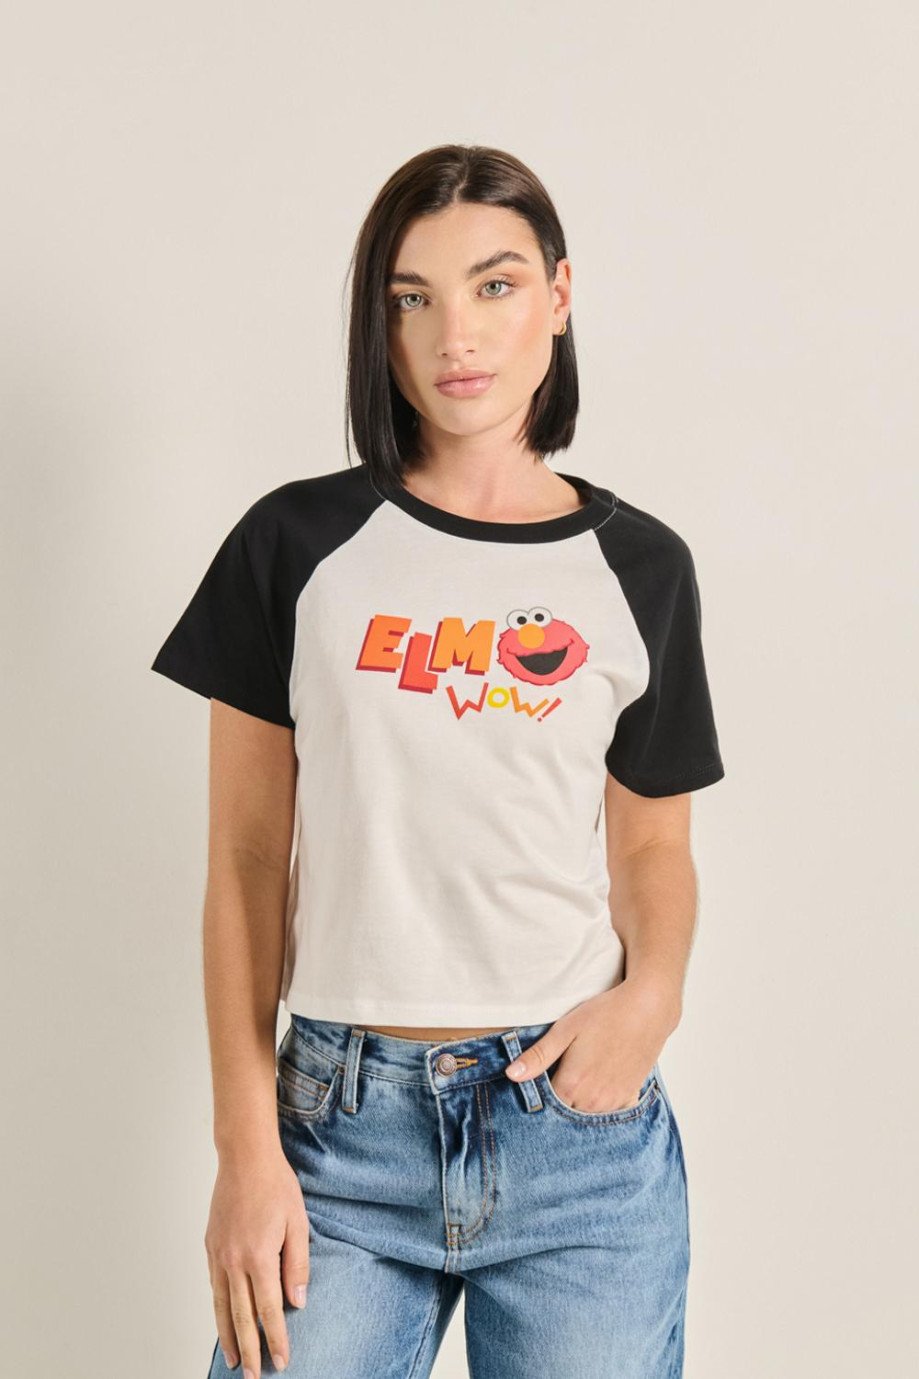 Camiseta manga corta en contraste estampada en frente de Elmo.